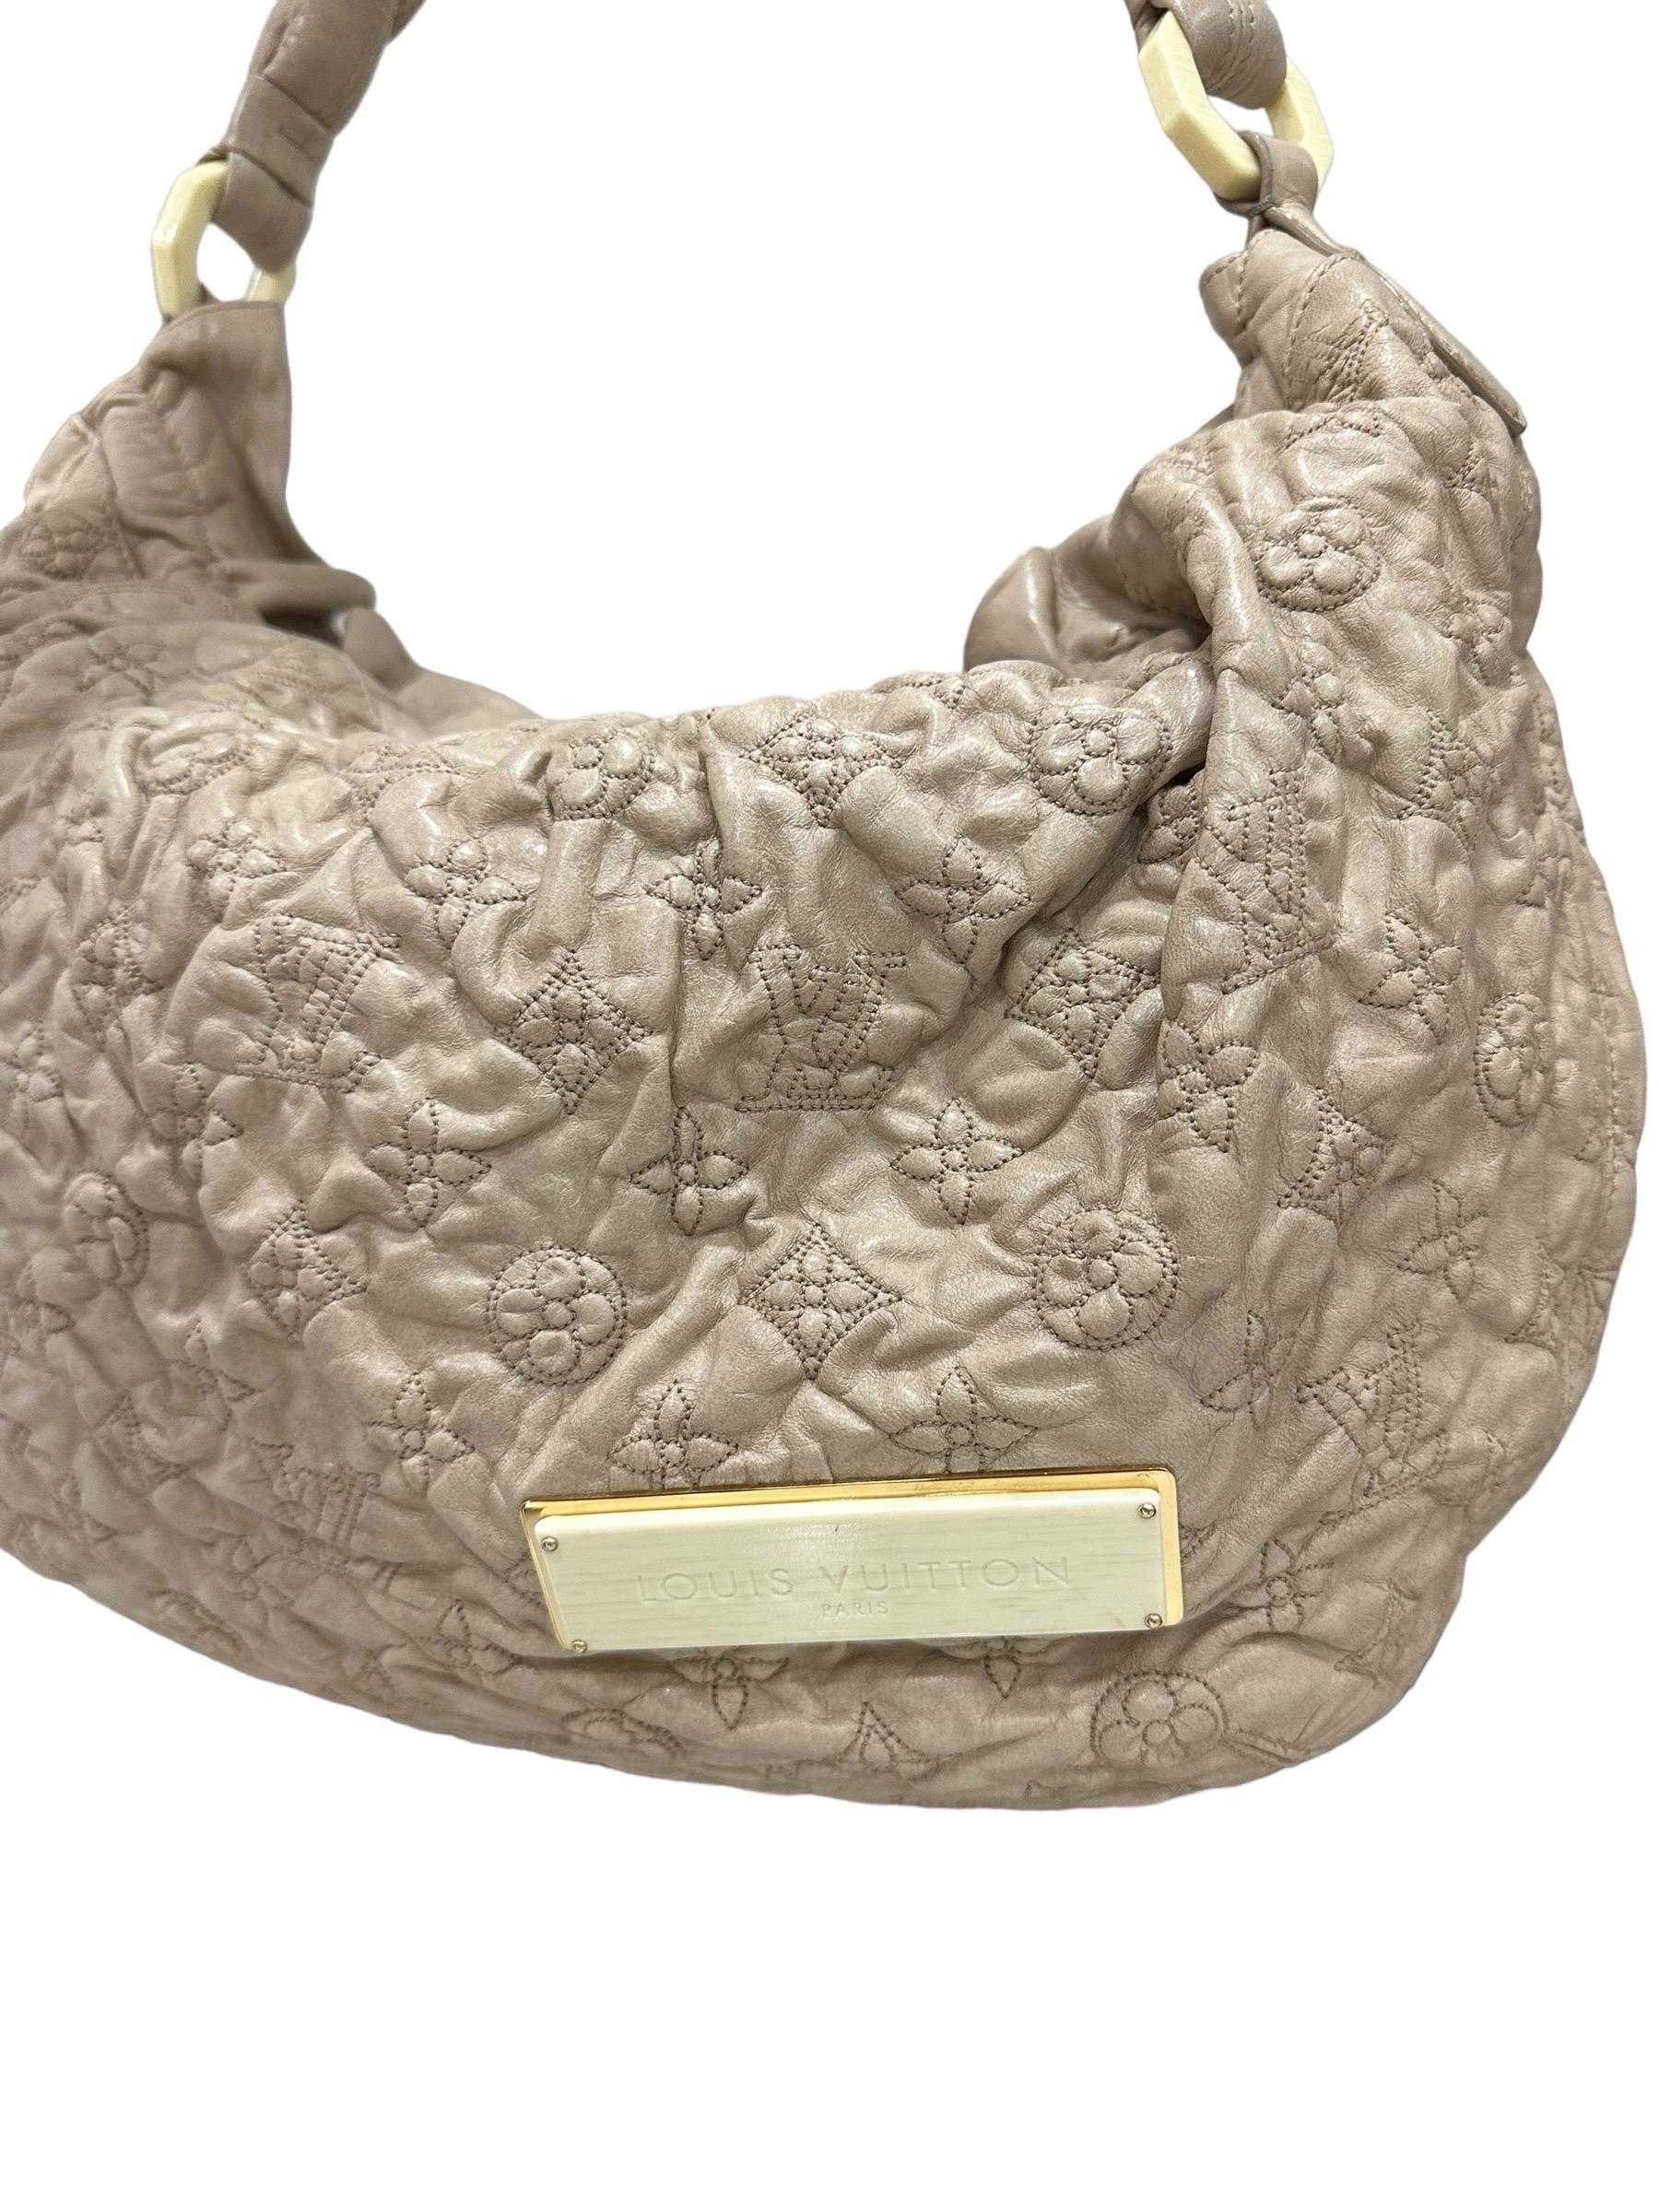 Louis Vuitton Olympe Nimbus Top Handle Bag Beige Emprainte Leather For Sale 1